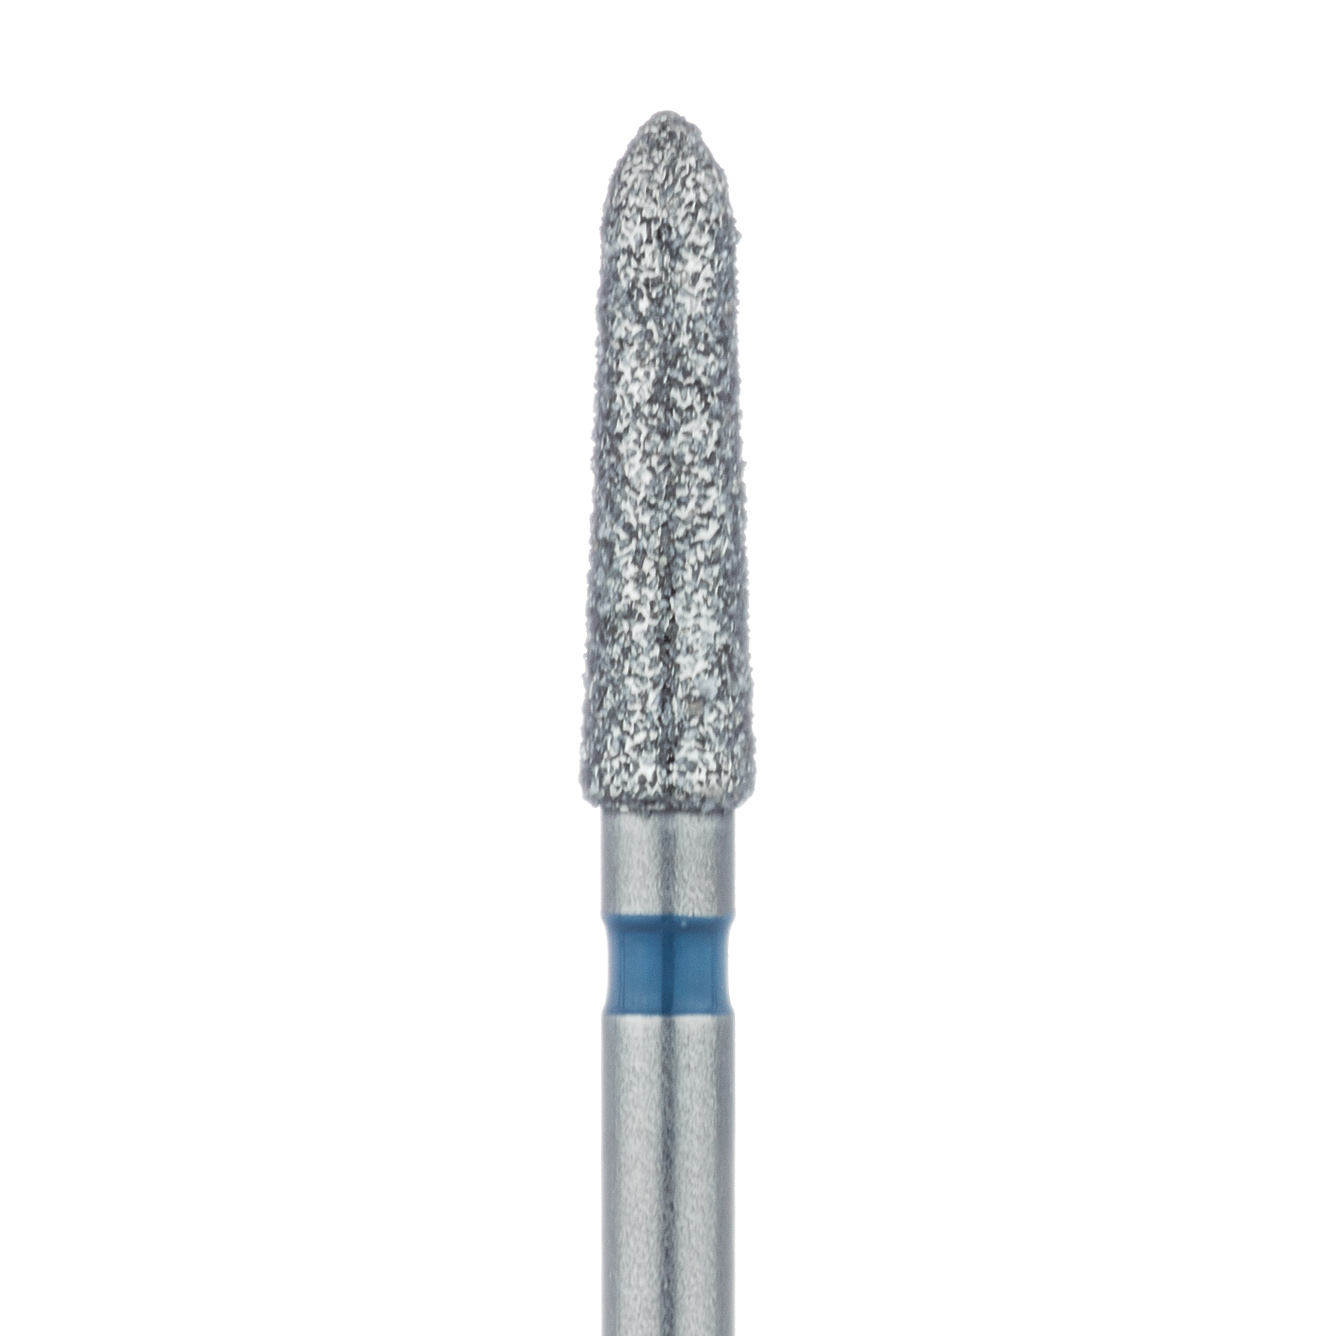 878-021-FG Modified Chamfer Diamond Bur, 2.1mm Medium, FG